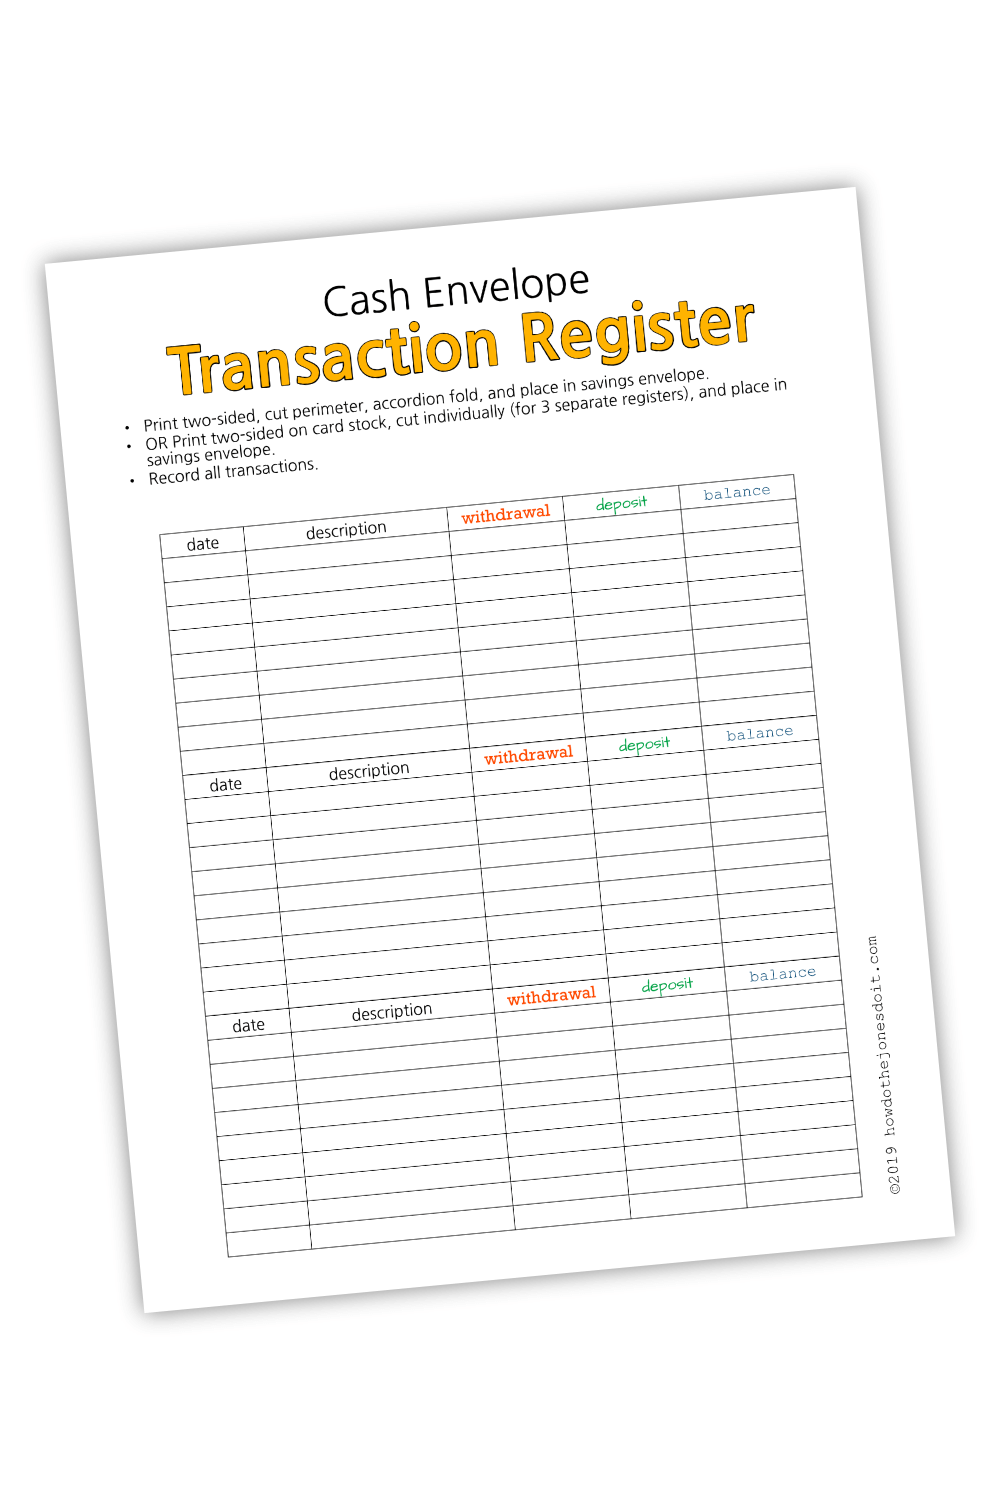 Transaction Register For Cash Envelopes (PDF)